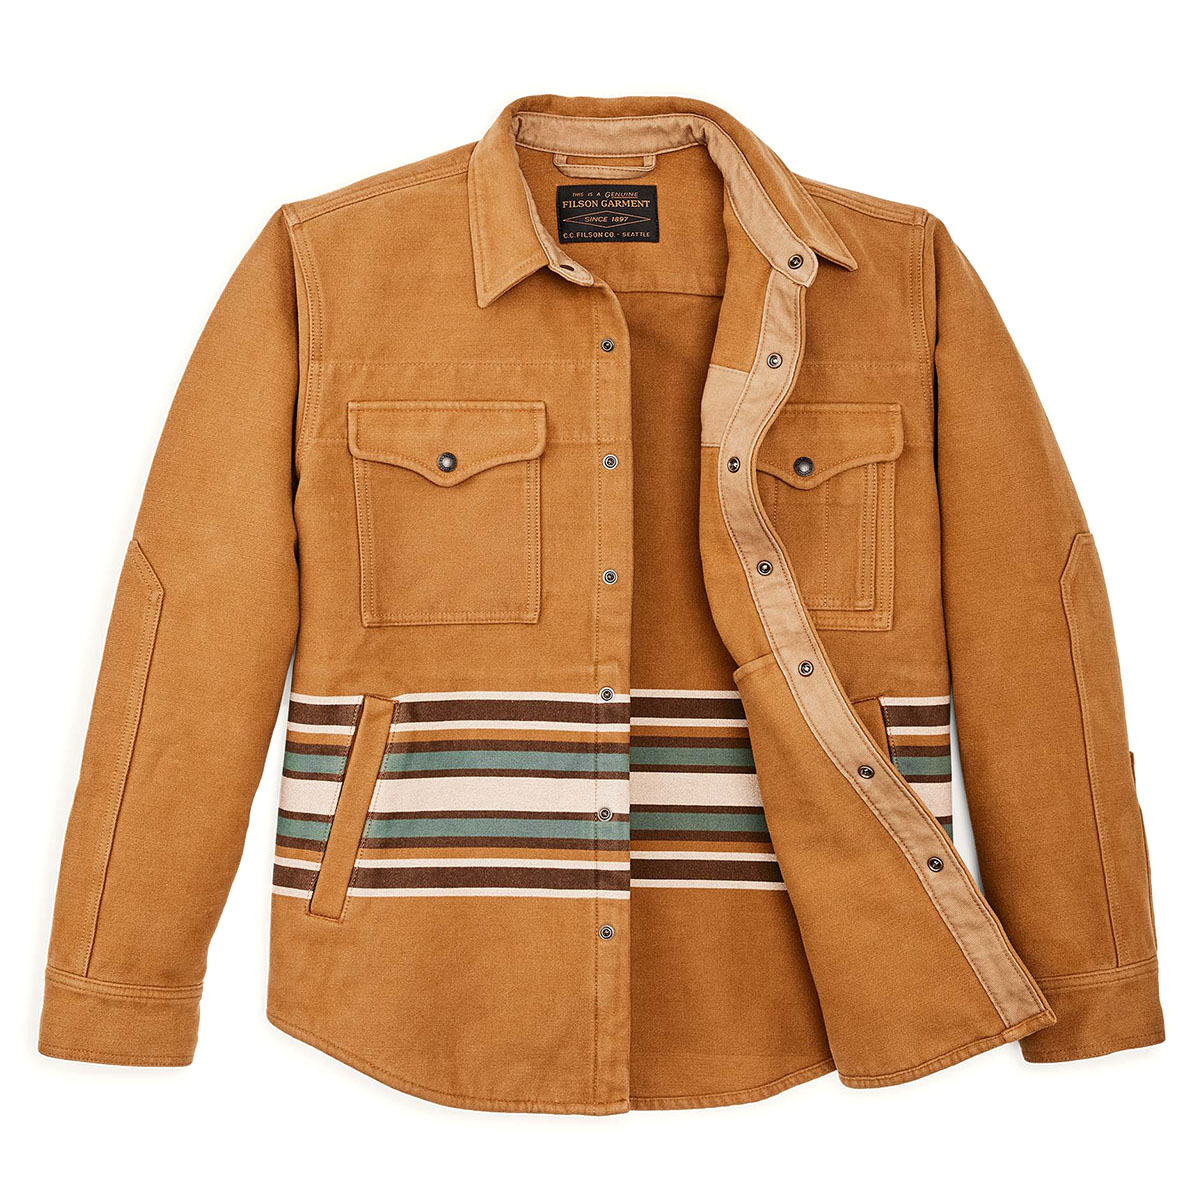 Filson Beartooth Jac-Shirt Golden Brown Multi Stripe, een warm en comfortabel 3-seizoenenoverhemd